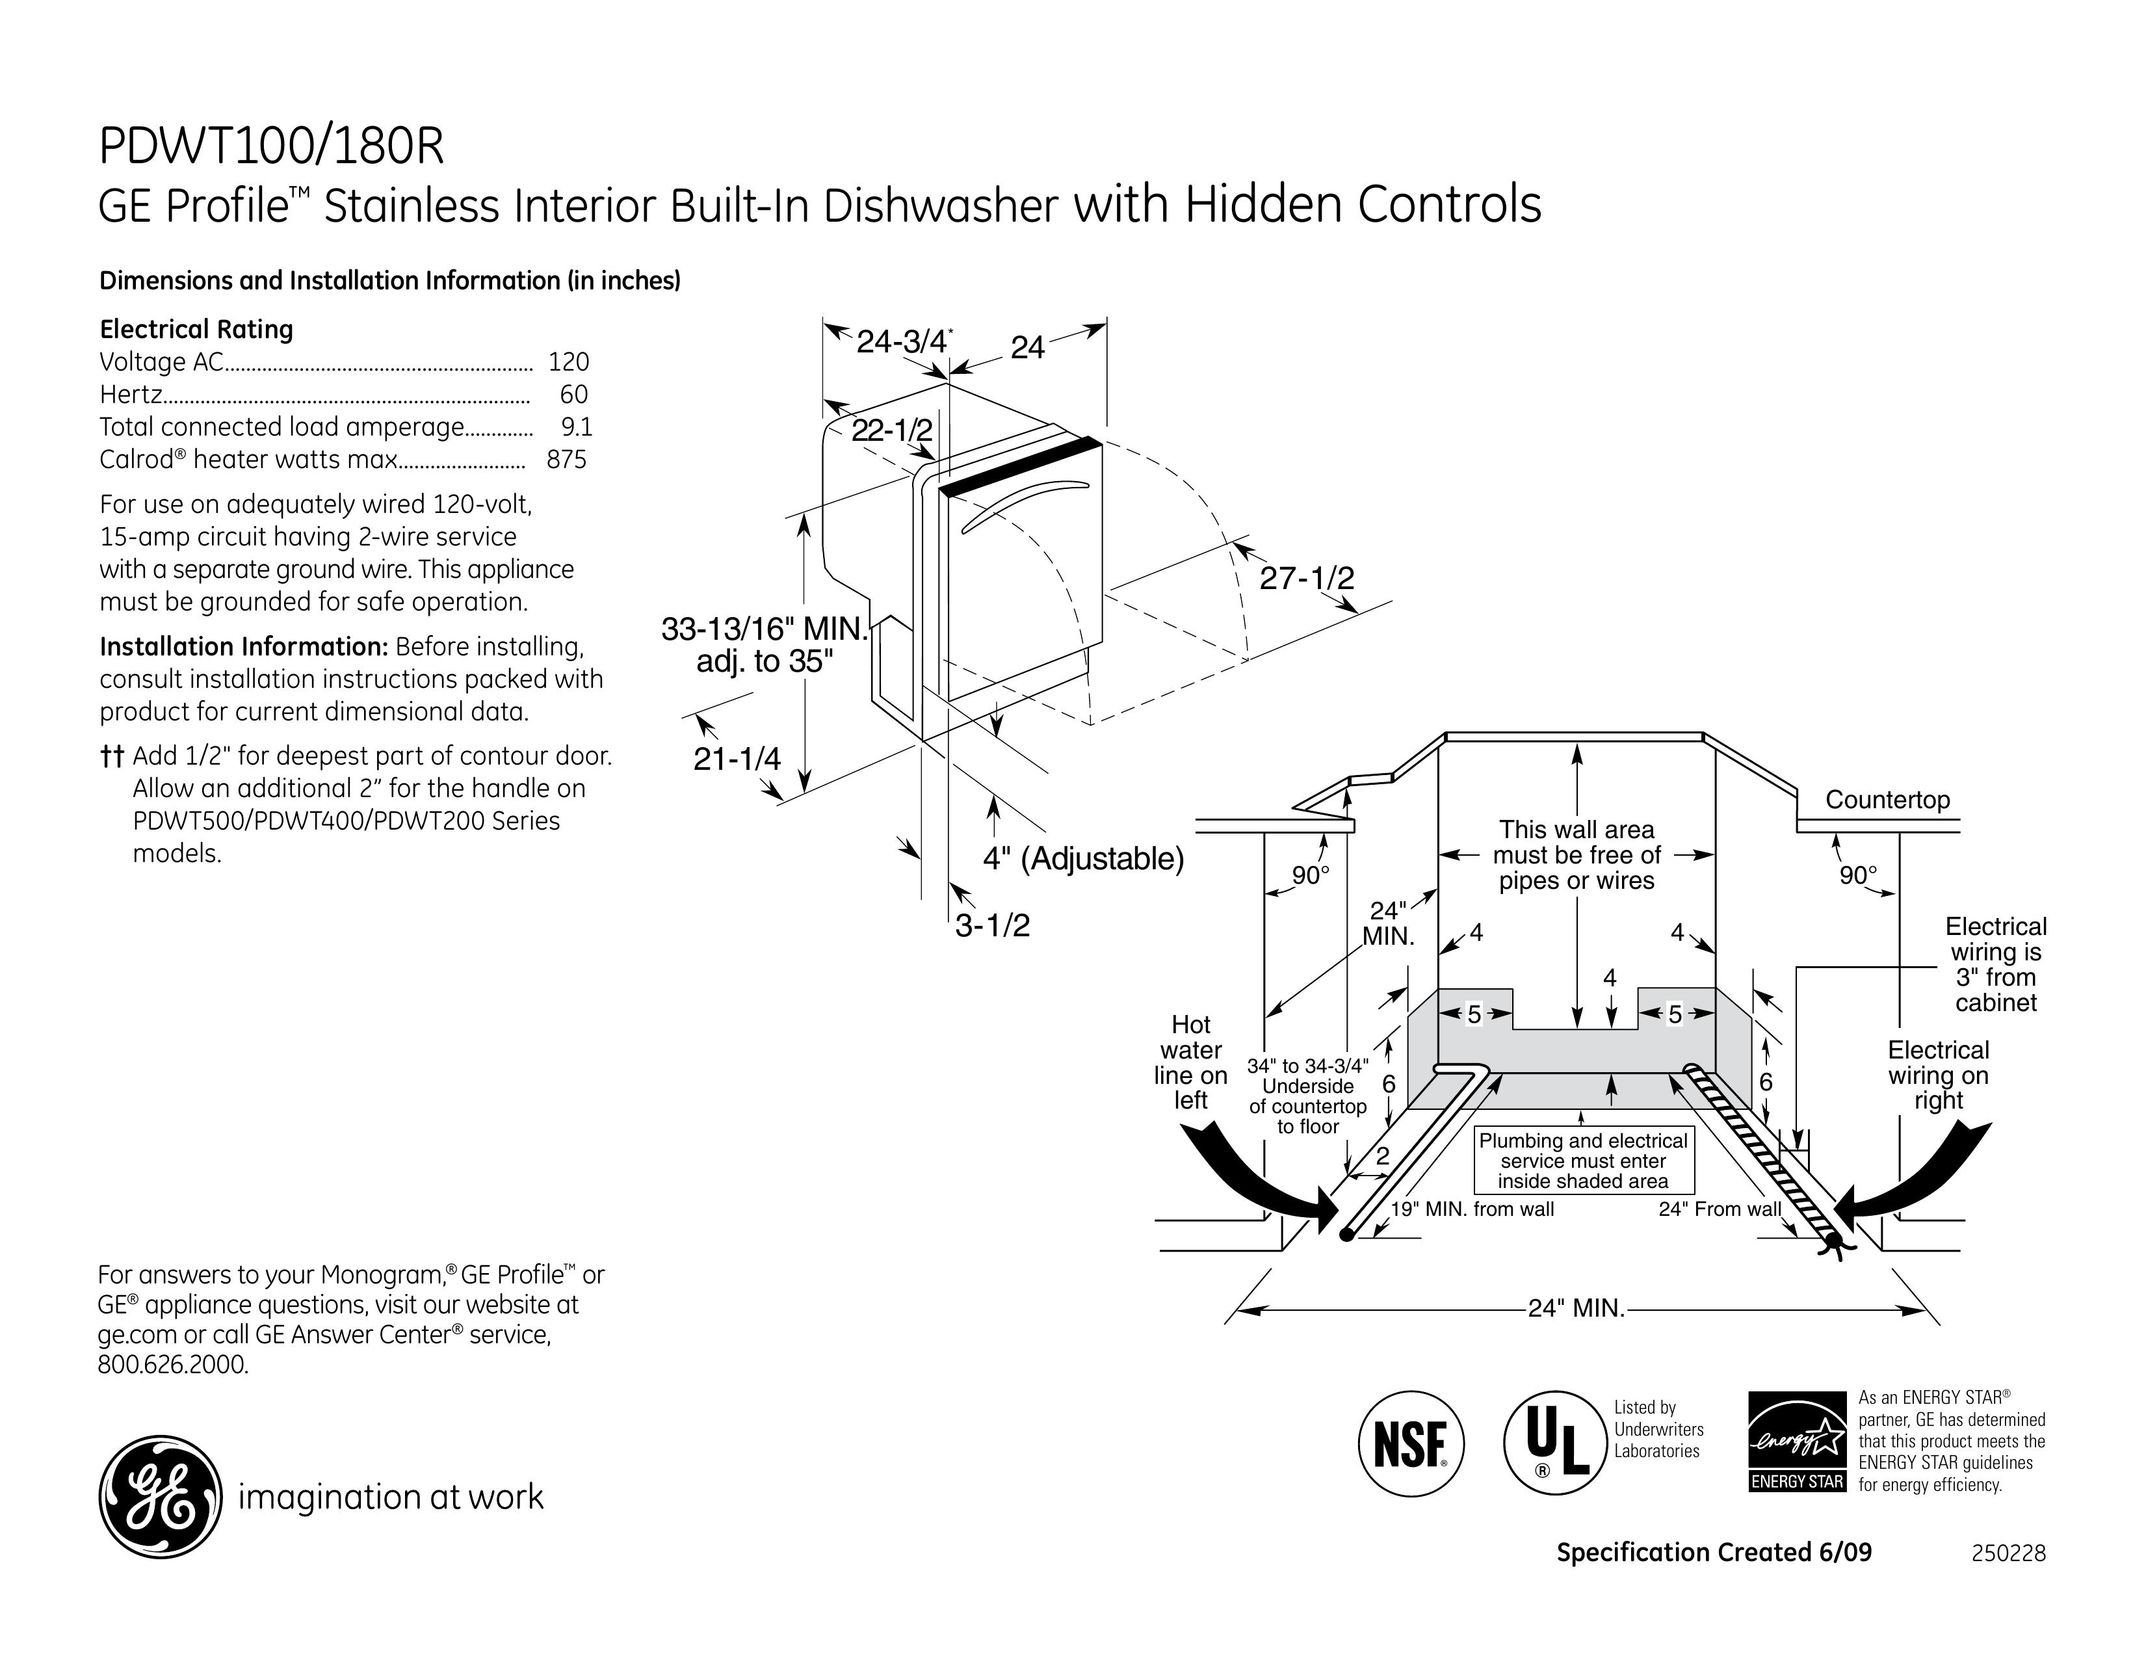 GE CDWT980 Dishwasher User Manual